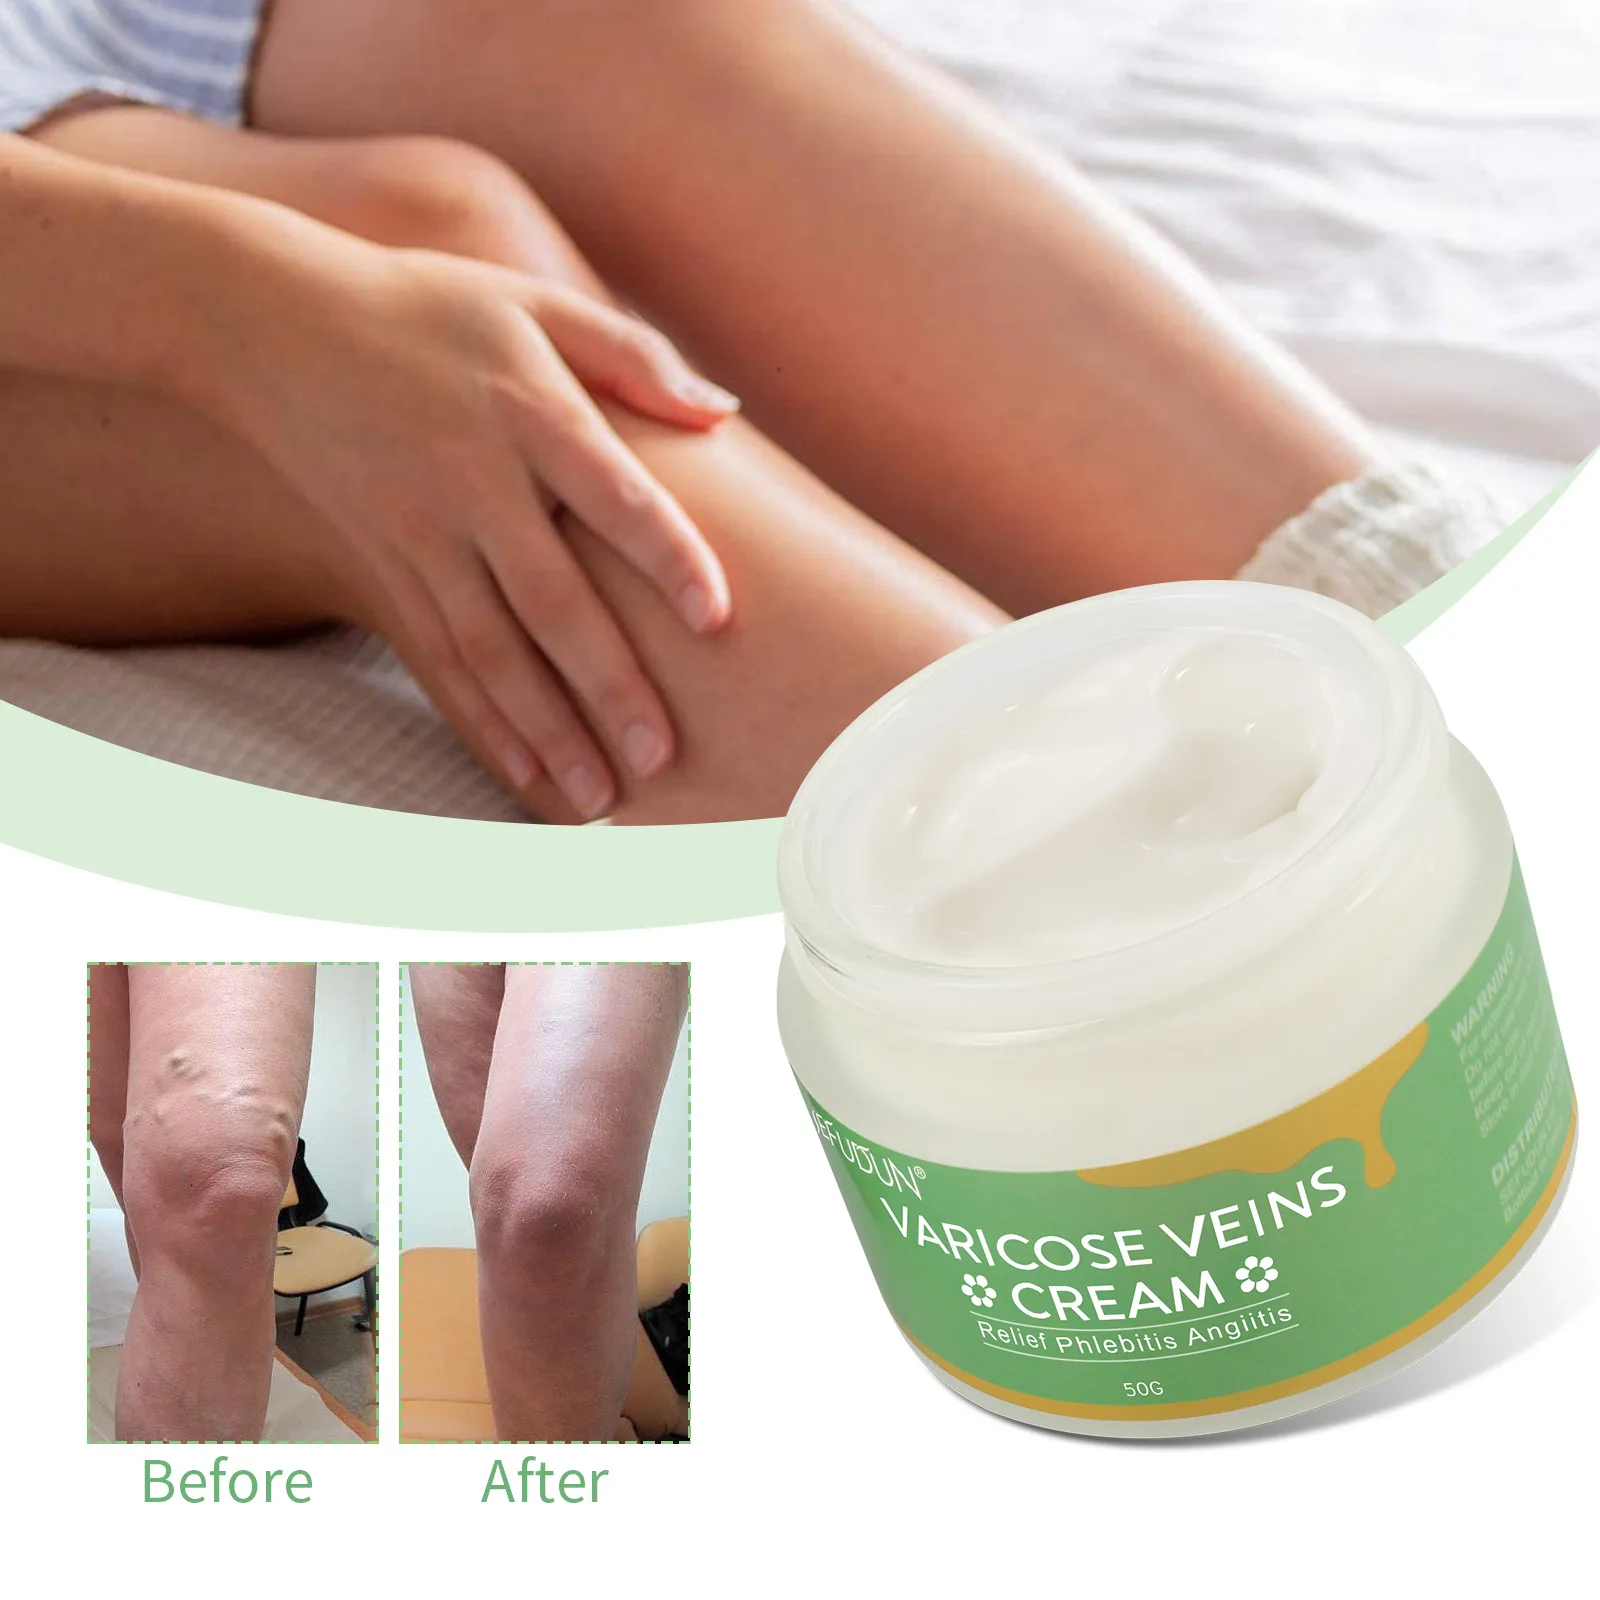 

50gVaricose Veins Cream Varicose Vein Soothing Leg Cream Natural Varicose & Spider Veins Treatment Strengthen Capillary Health